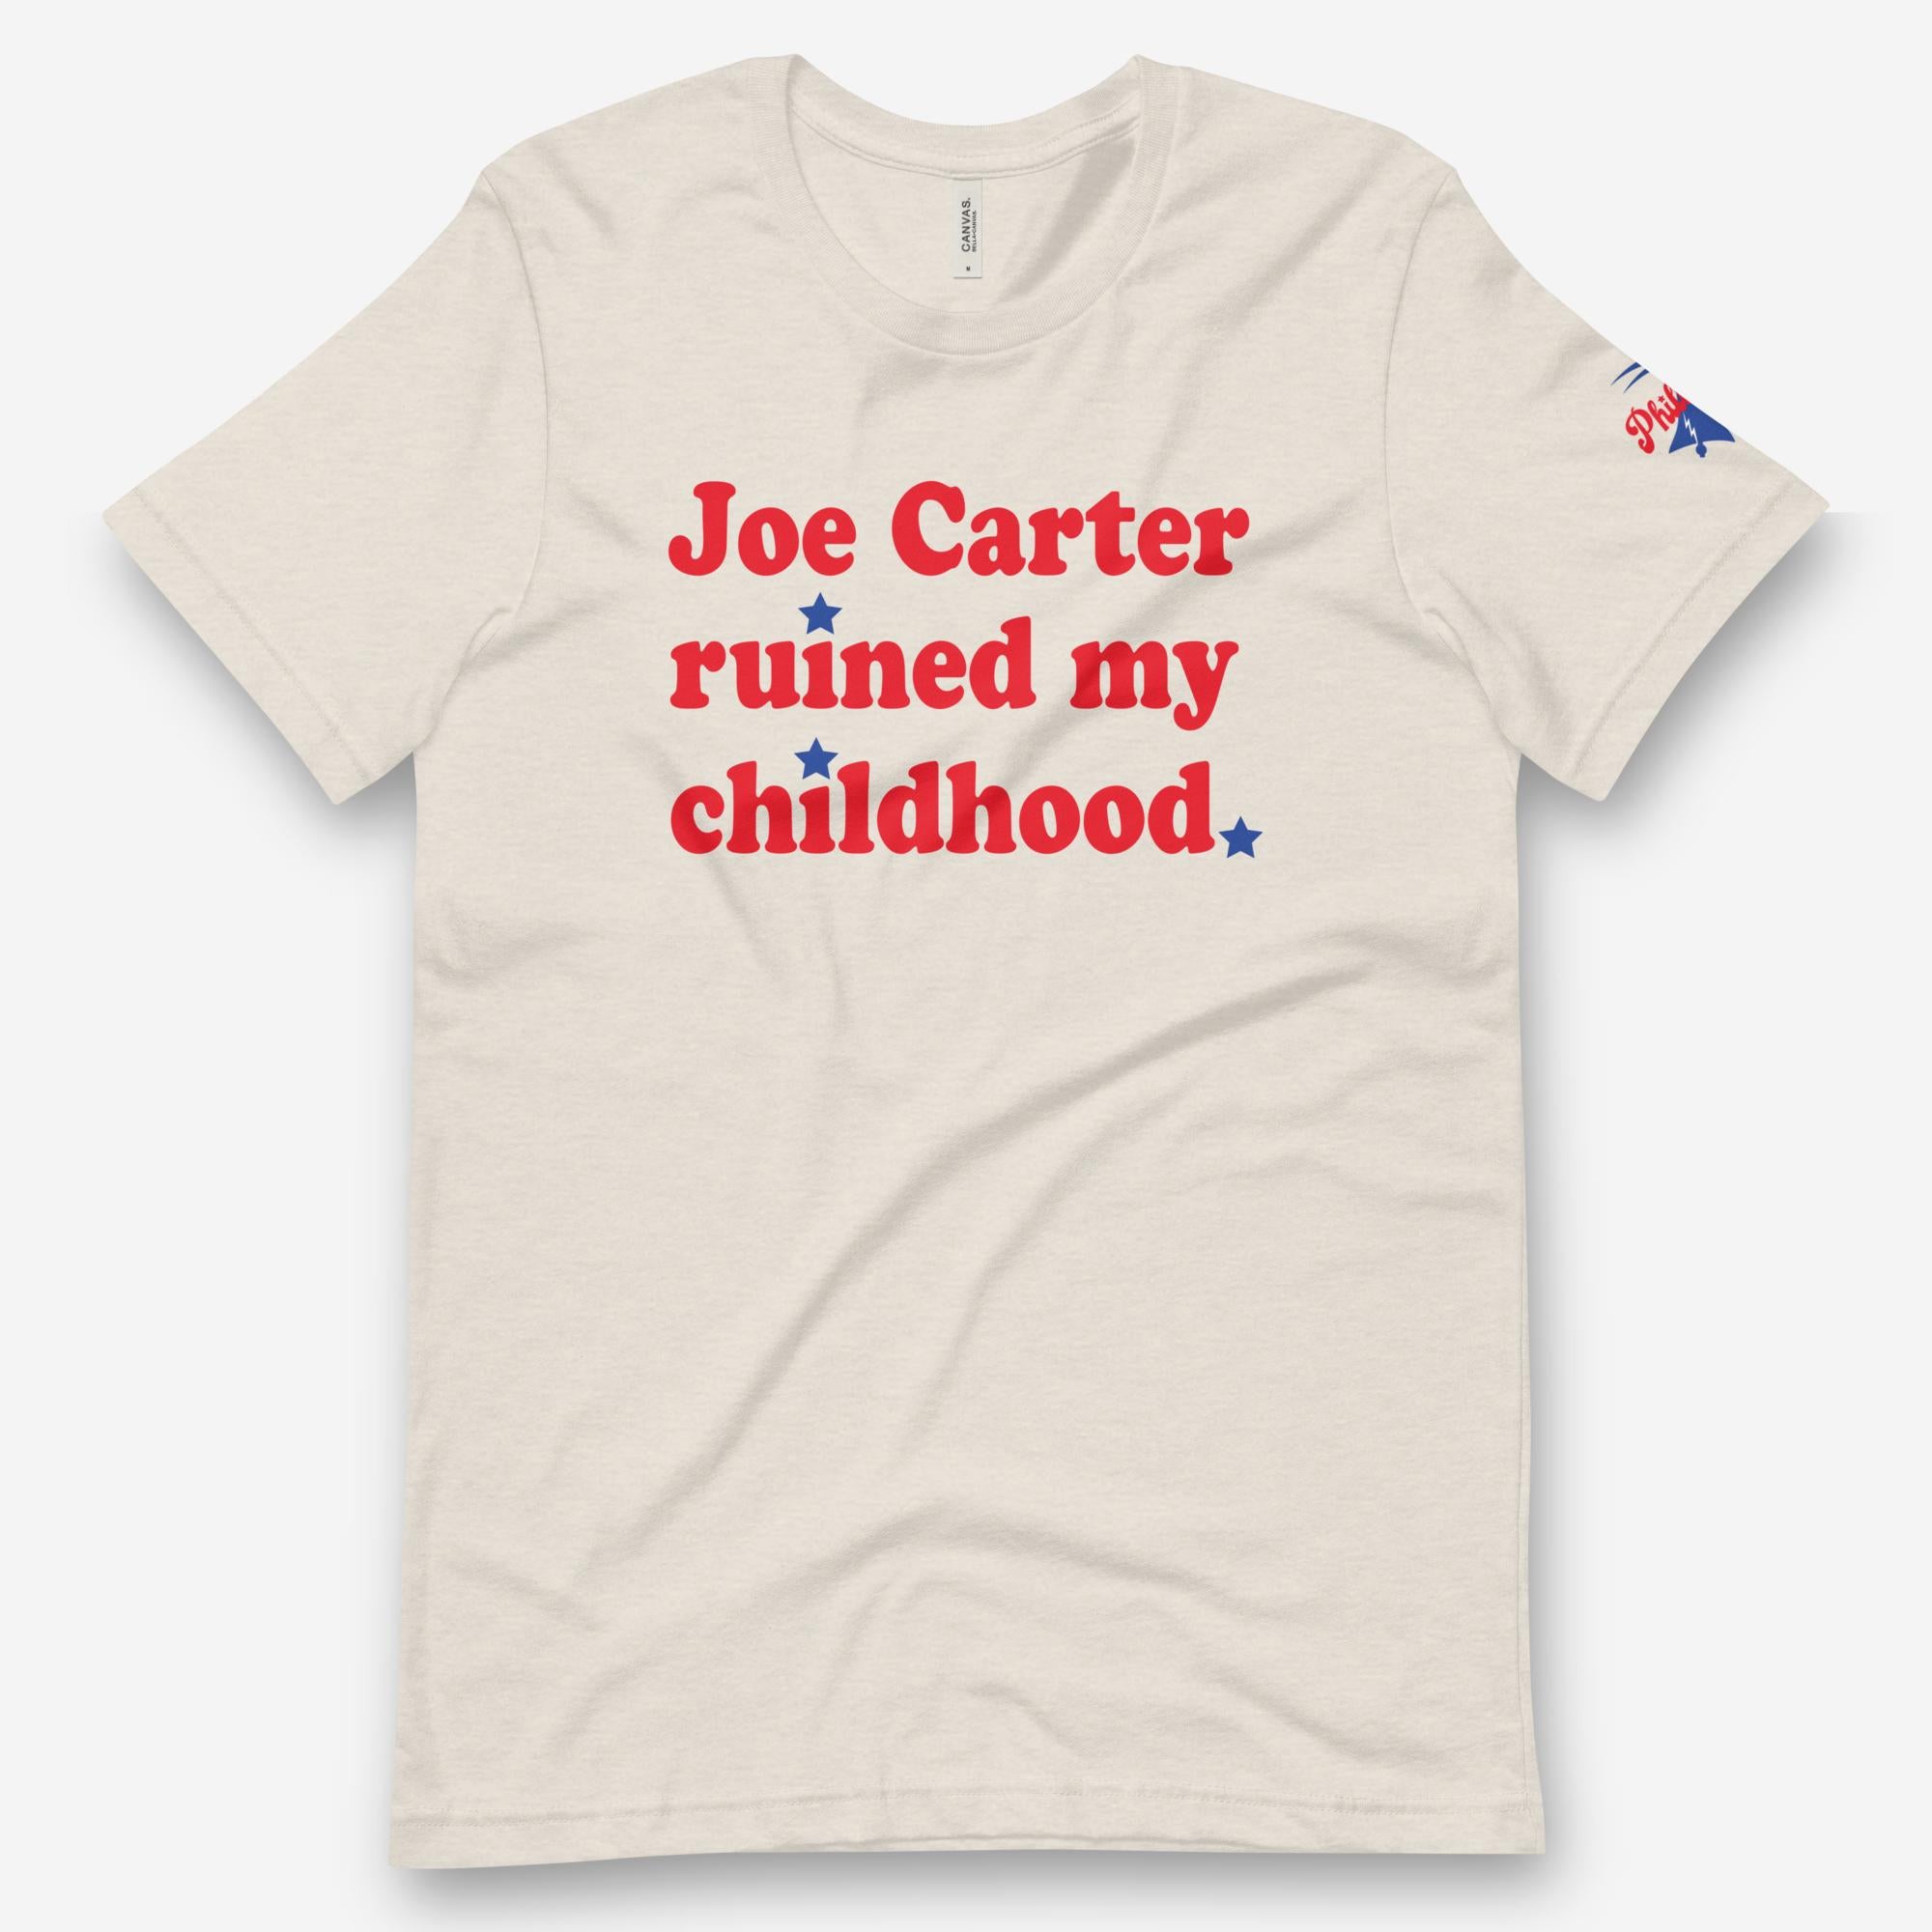 "Joe Carter Ruined My Childhood" Tee